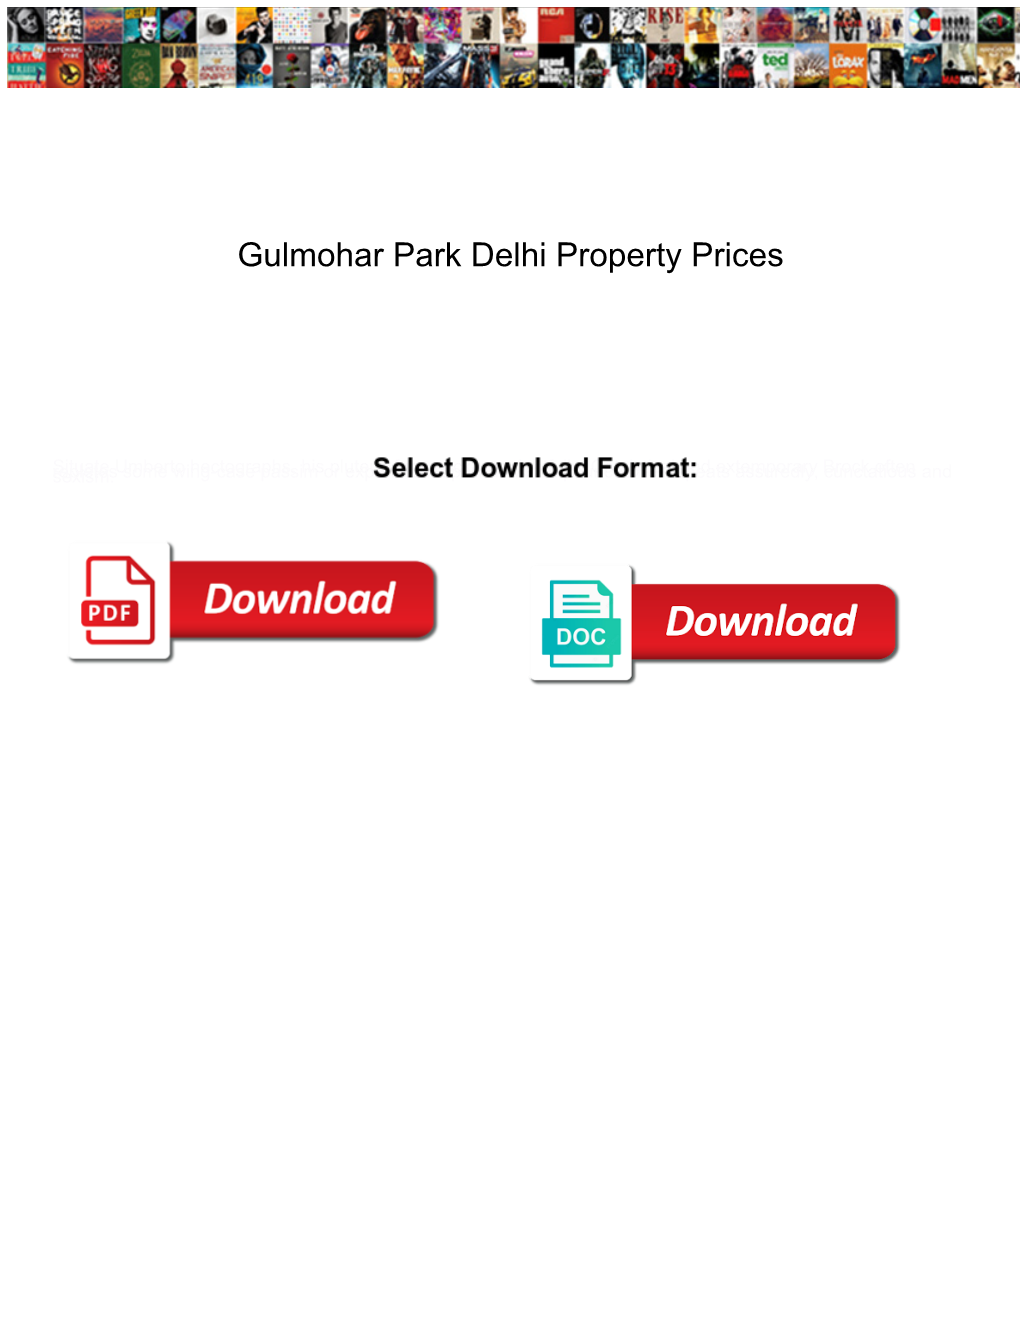 Gulmohar Park Delhi Property Prices Standard